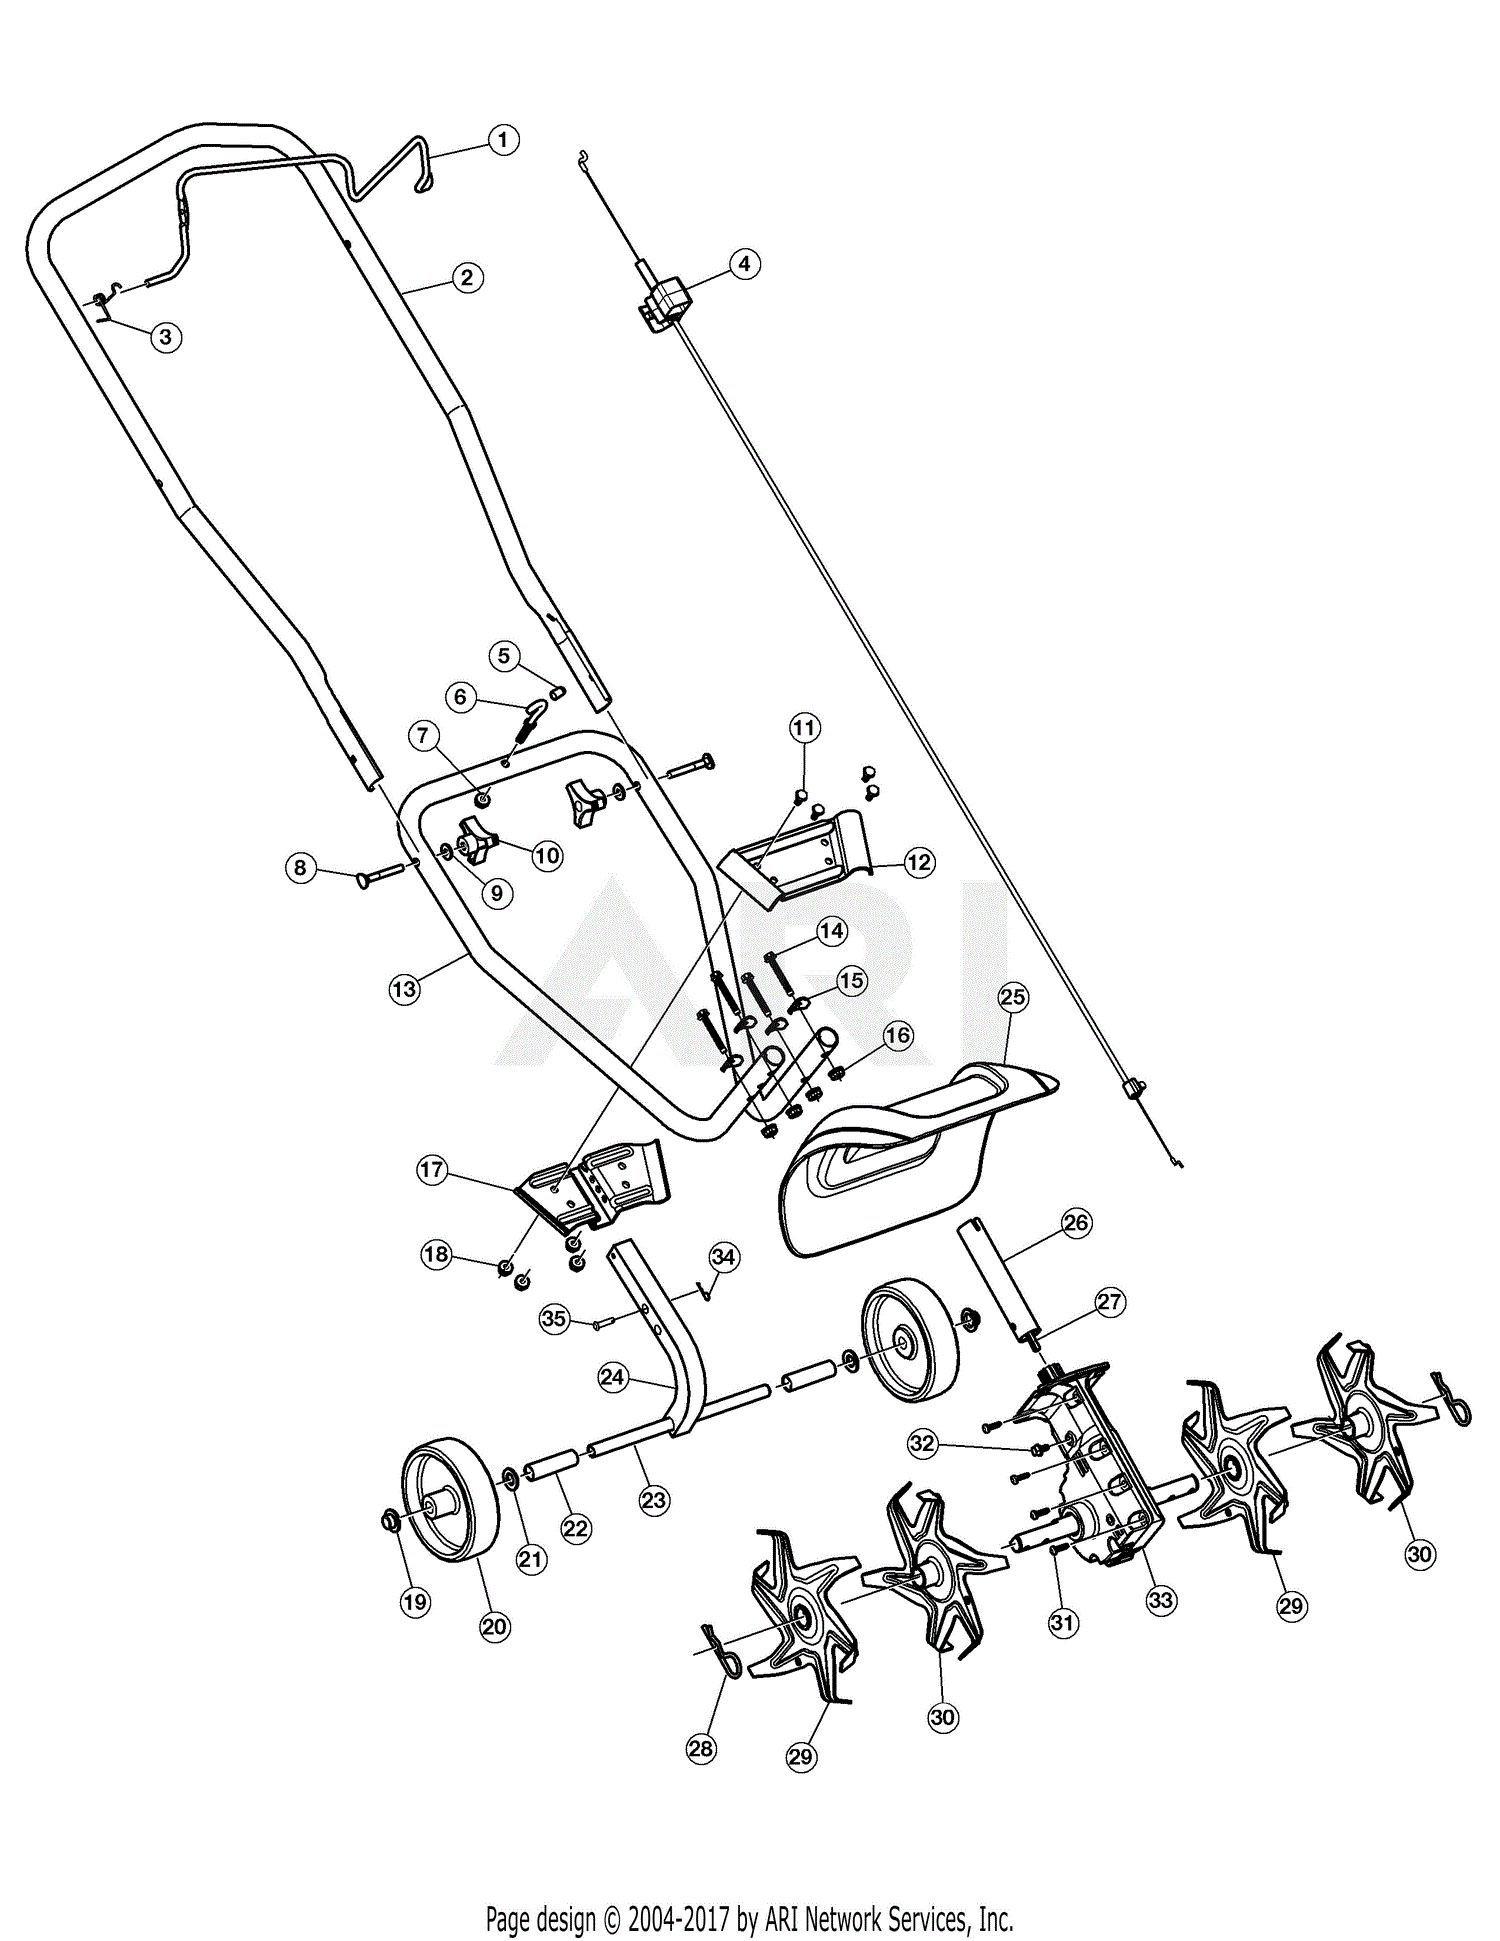 MTD Y128 21AK125G900, 21AK125G900 Parts Diagram for General Assembly